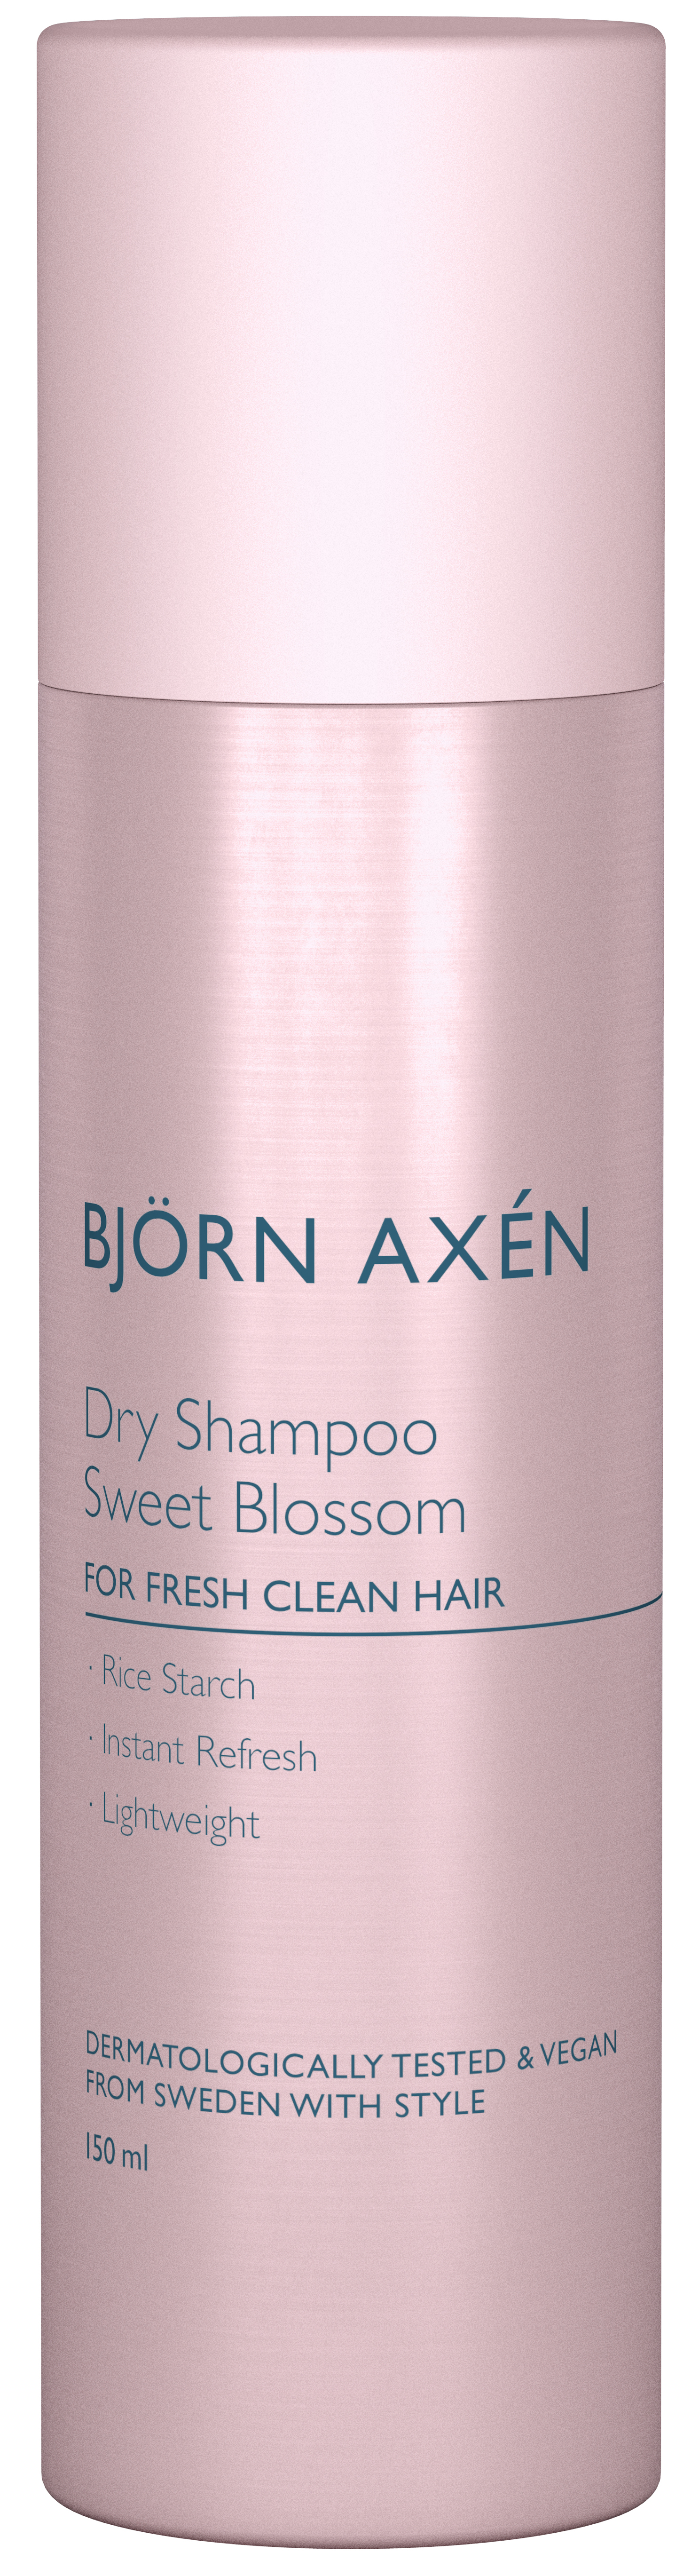 afsnit Tigge Alt det bedste Björn Axen Björn Axén Dry Shampoo Sweet Blossom 150 ml | lyko.com